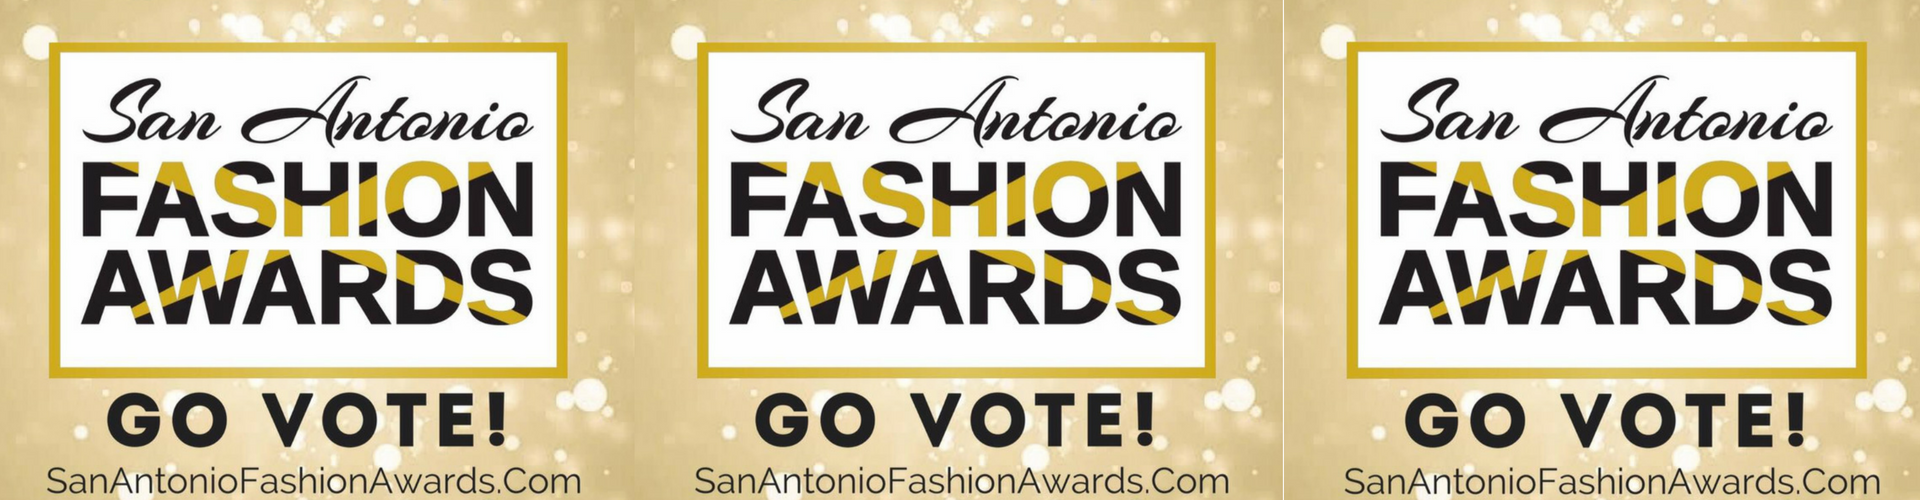 Vote for Haute in Texas for the San Antonio Fashion Awards!